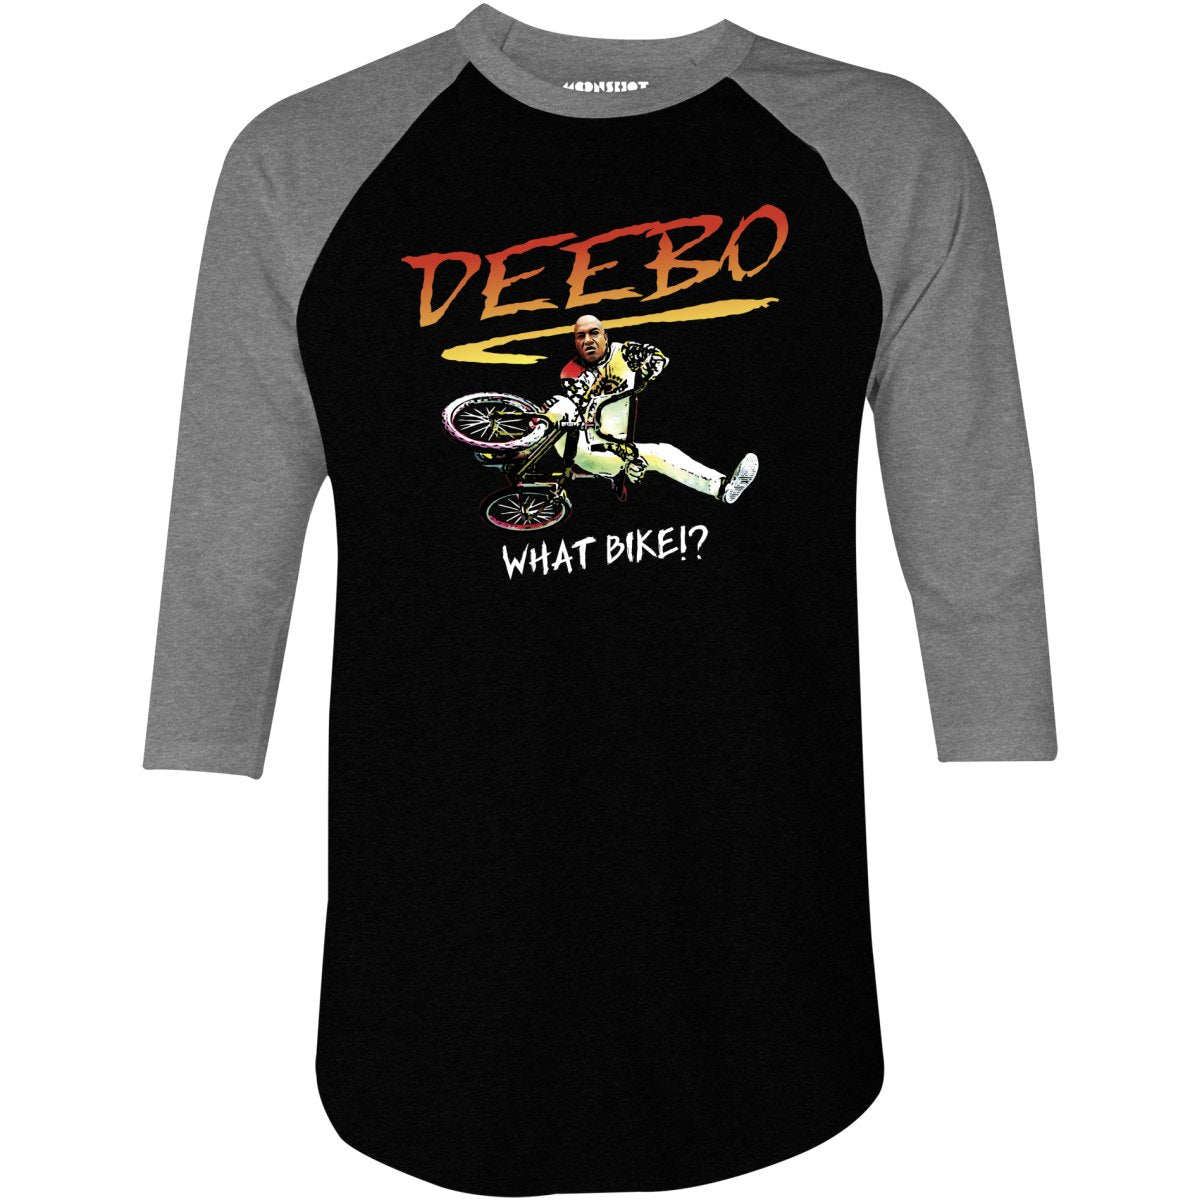 Deebo Rad BMX Bike Parody Mashup - 3/4 Sleeve Raglan T-Shirt